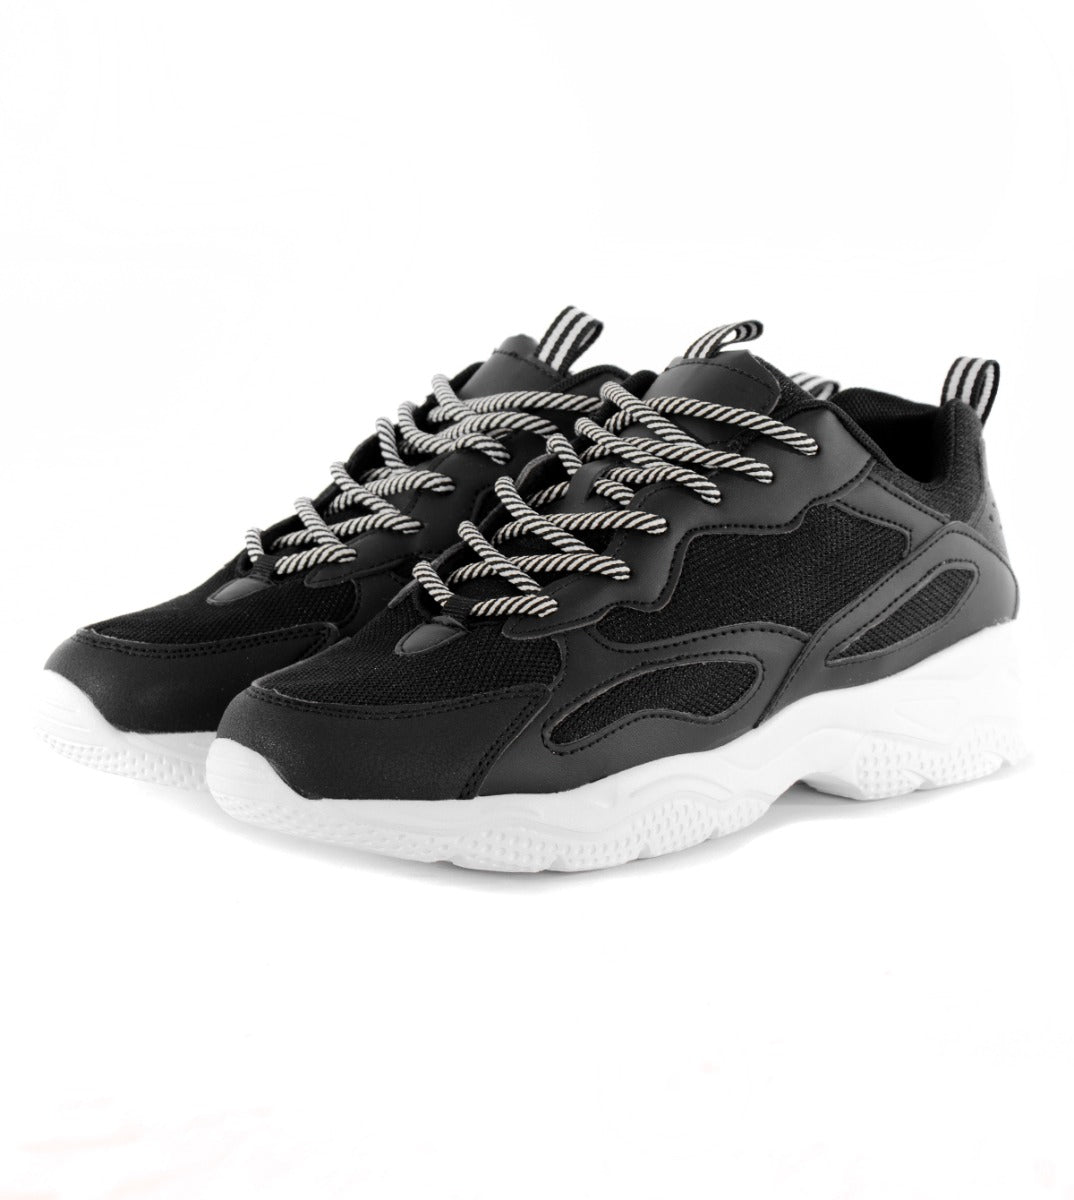 Scarpe Uomo Shoes Alta Sneakers Sportiva Casual Nera GIOSAL-S1078A